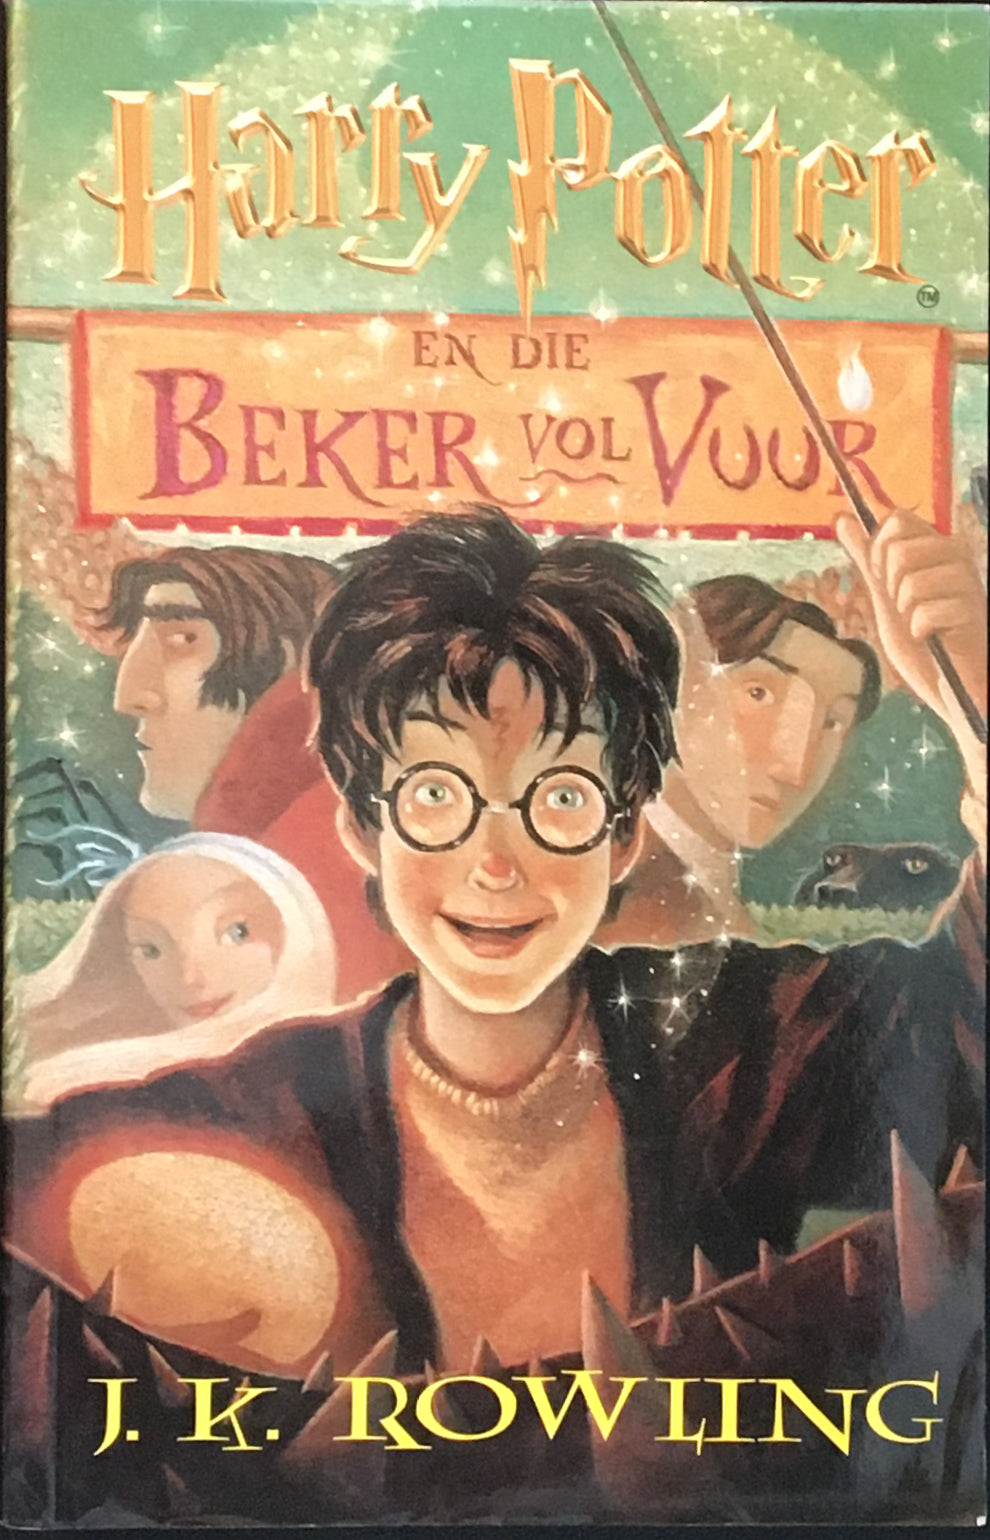 En Die Beker Vol Vuur | Harry Potter and the Goblet of Fire | Book 4 | Afrikaans